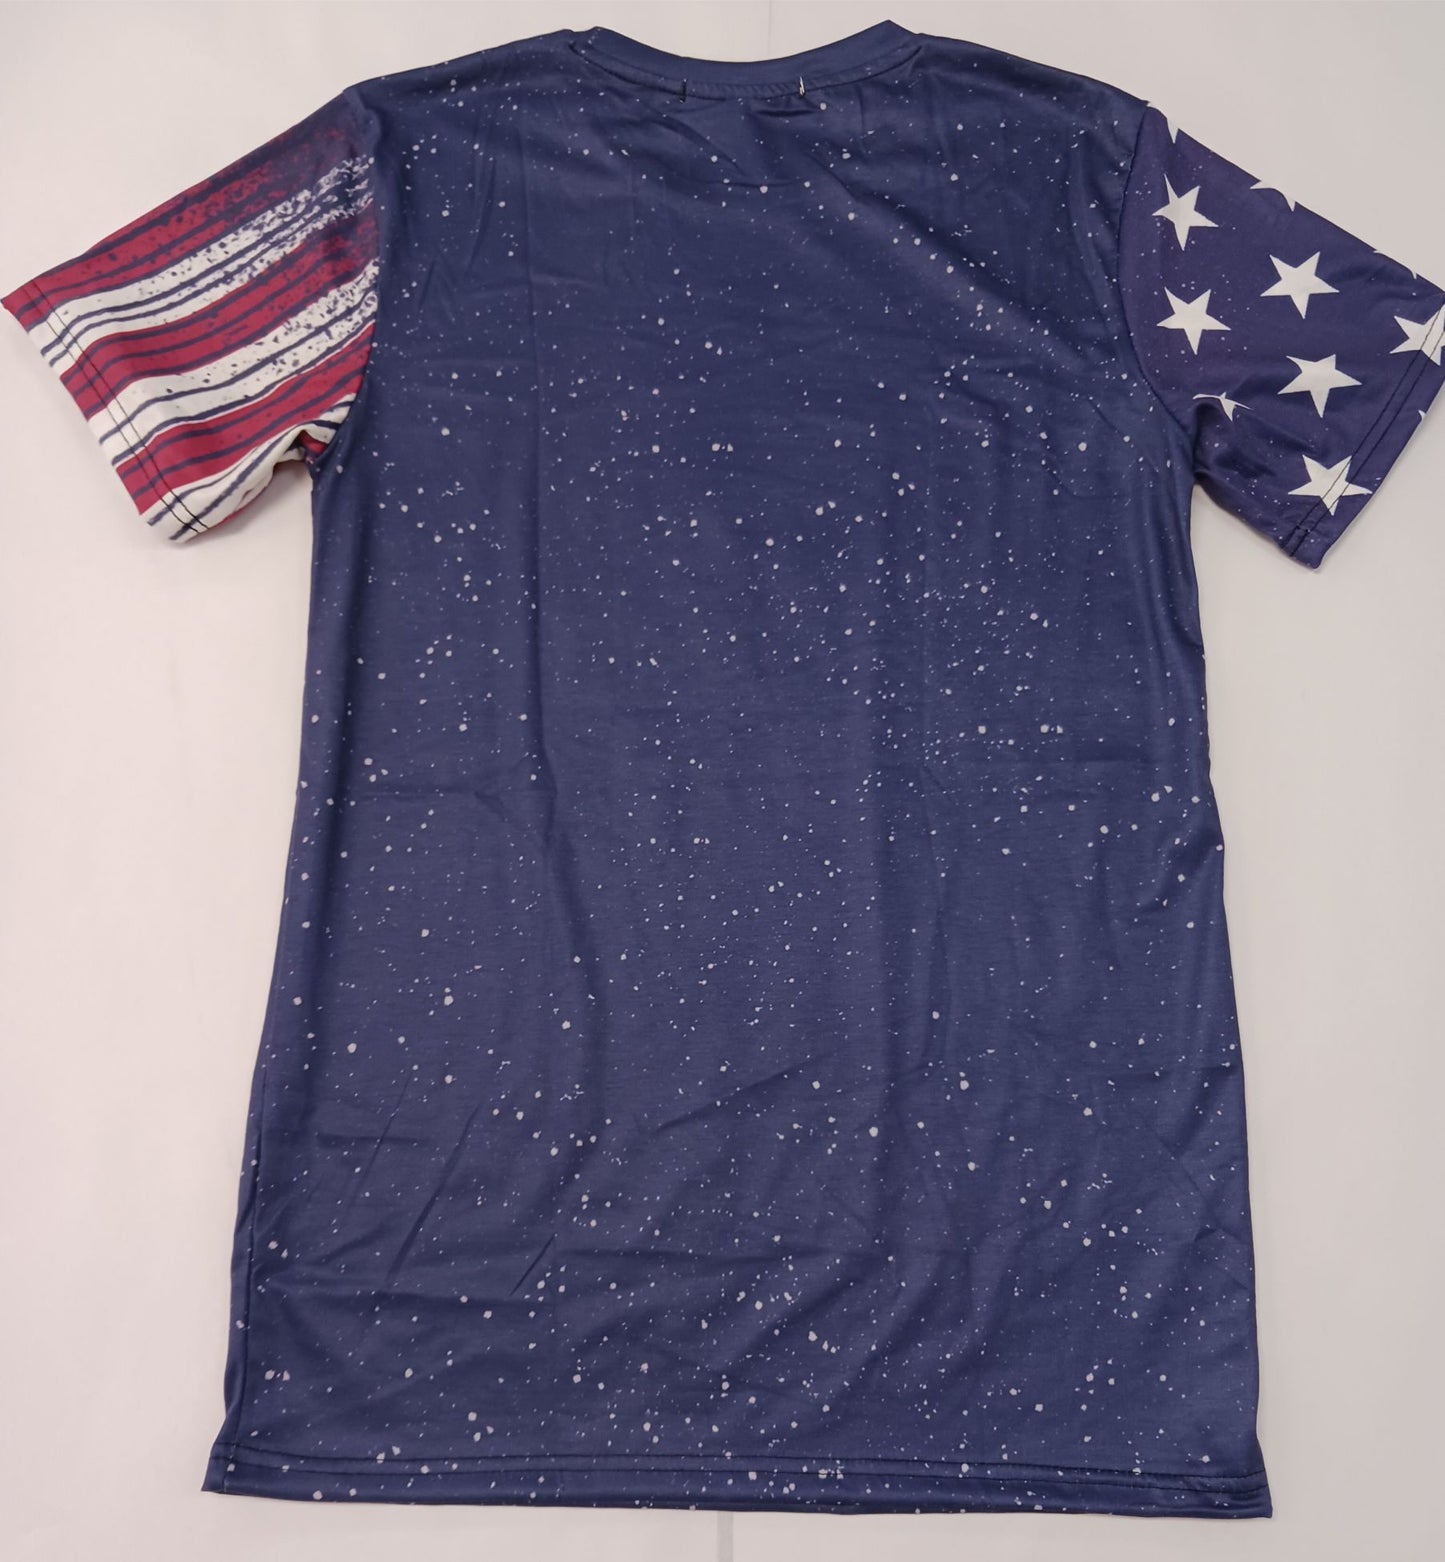 Adult T Shirt American Stripe And Star - Read Description